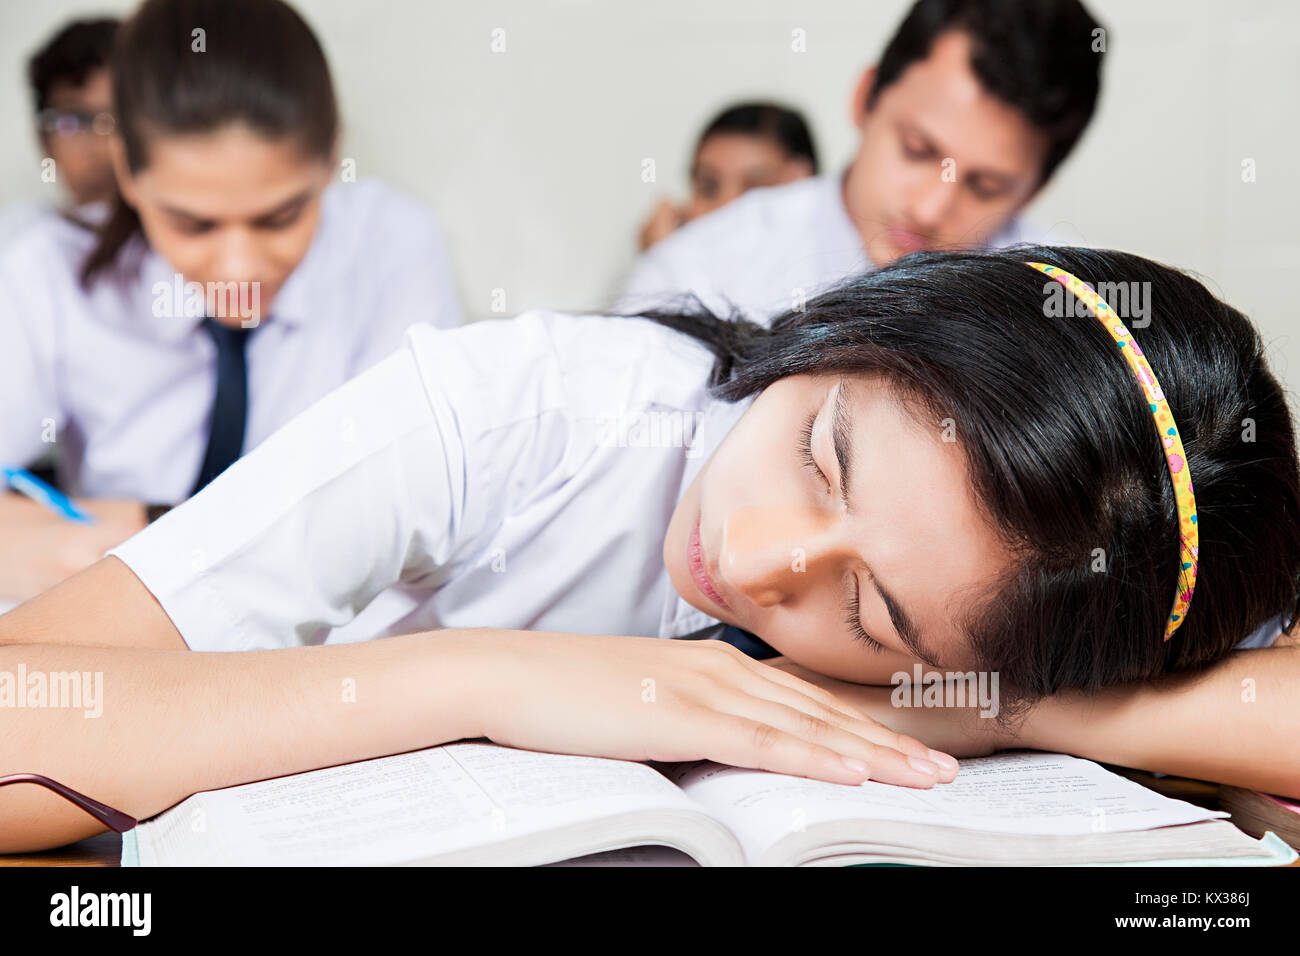 1 Indian School Teenager Girl Student Sleeping In Class Careless Stock Photo